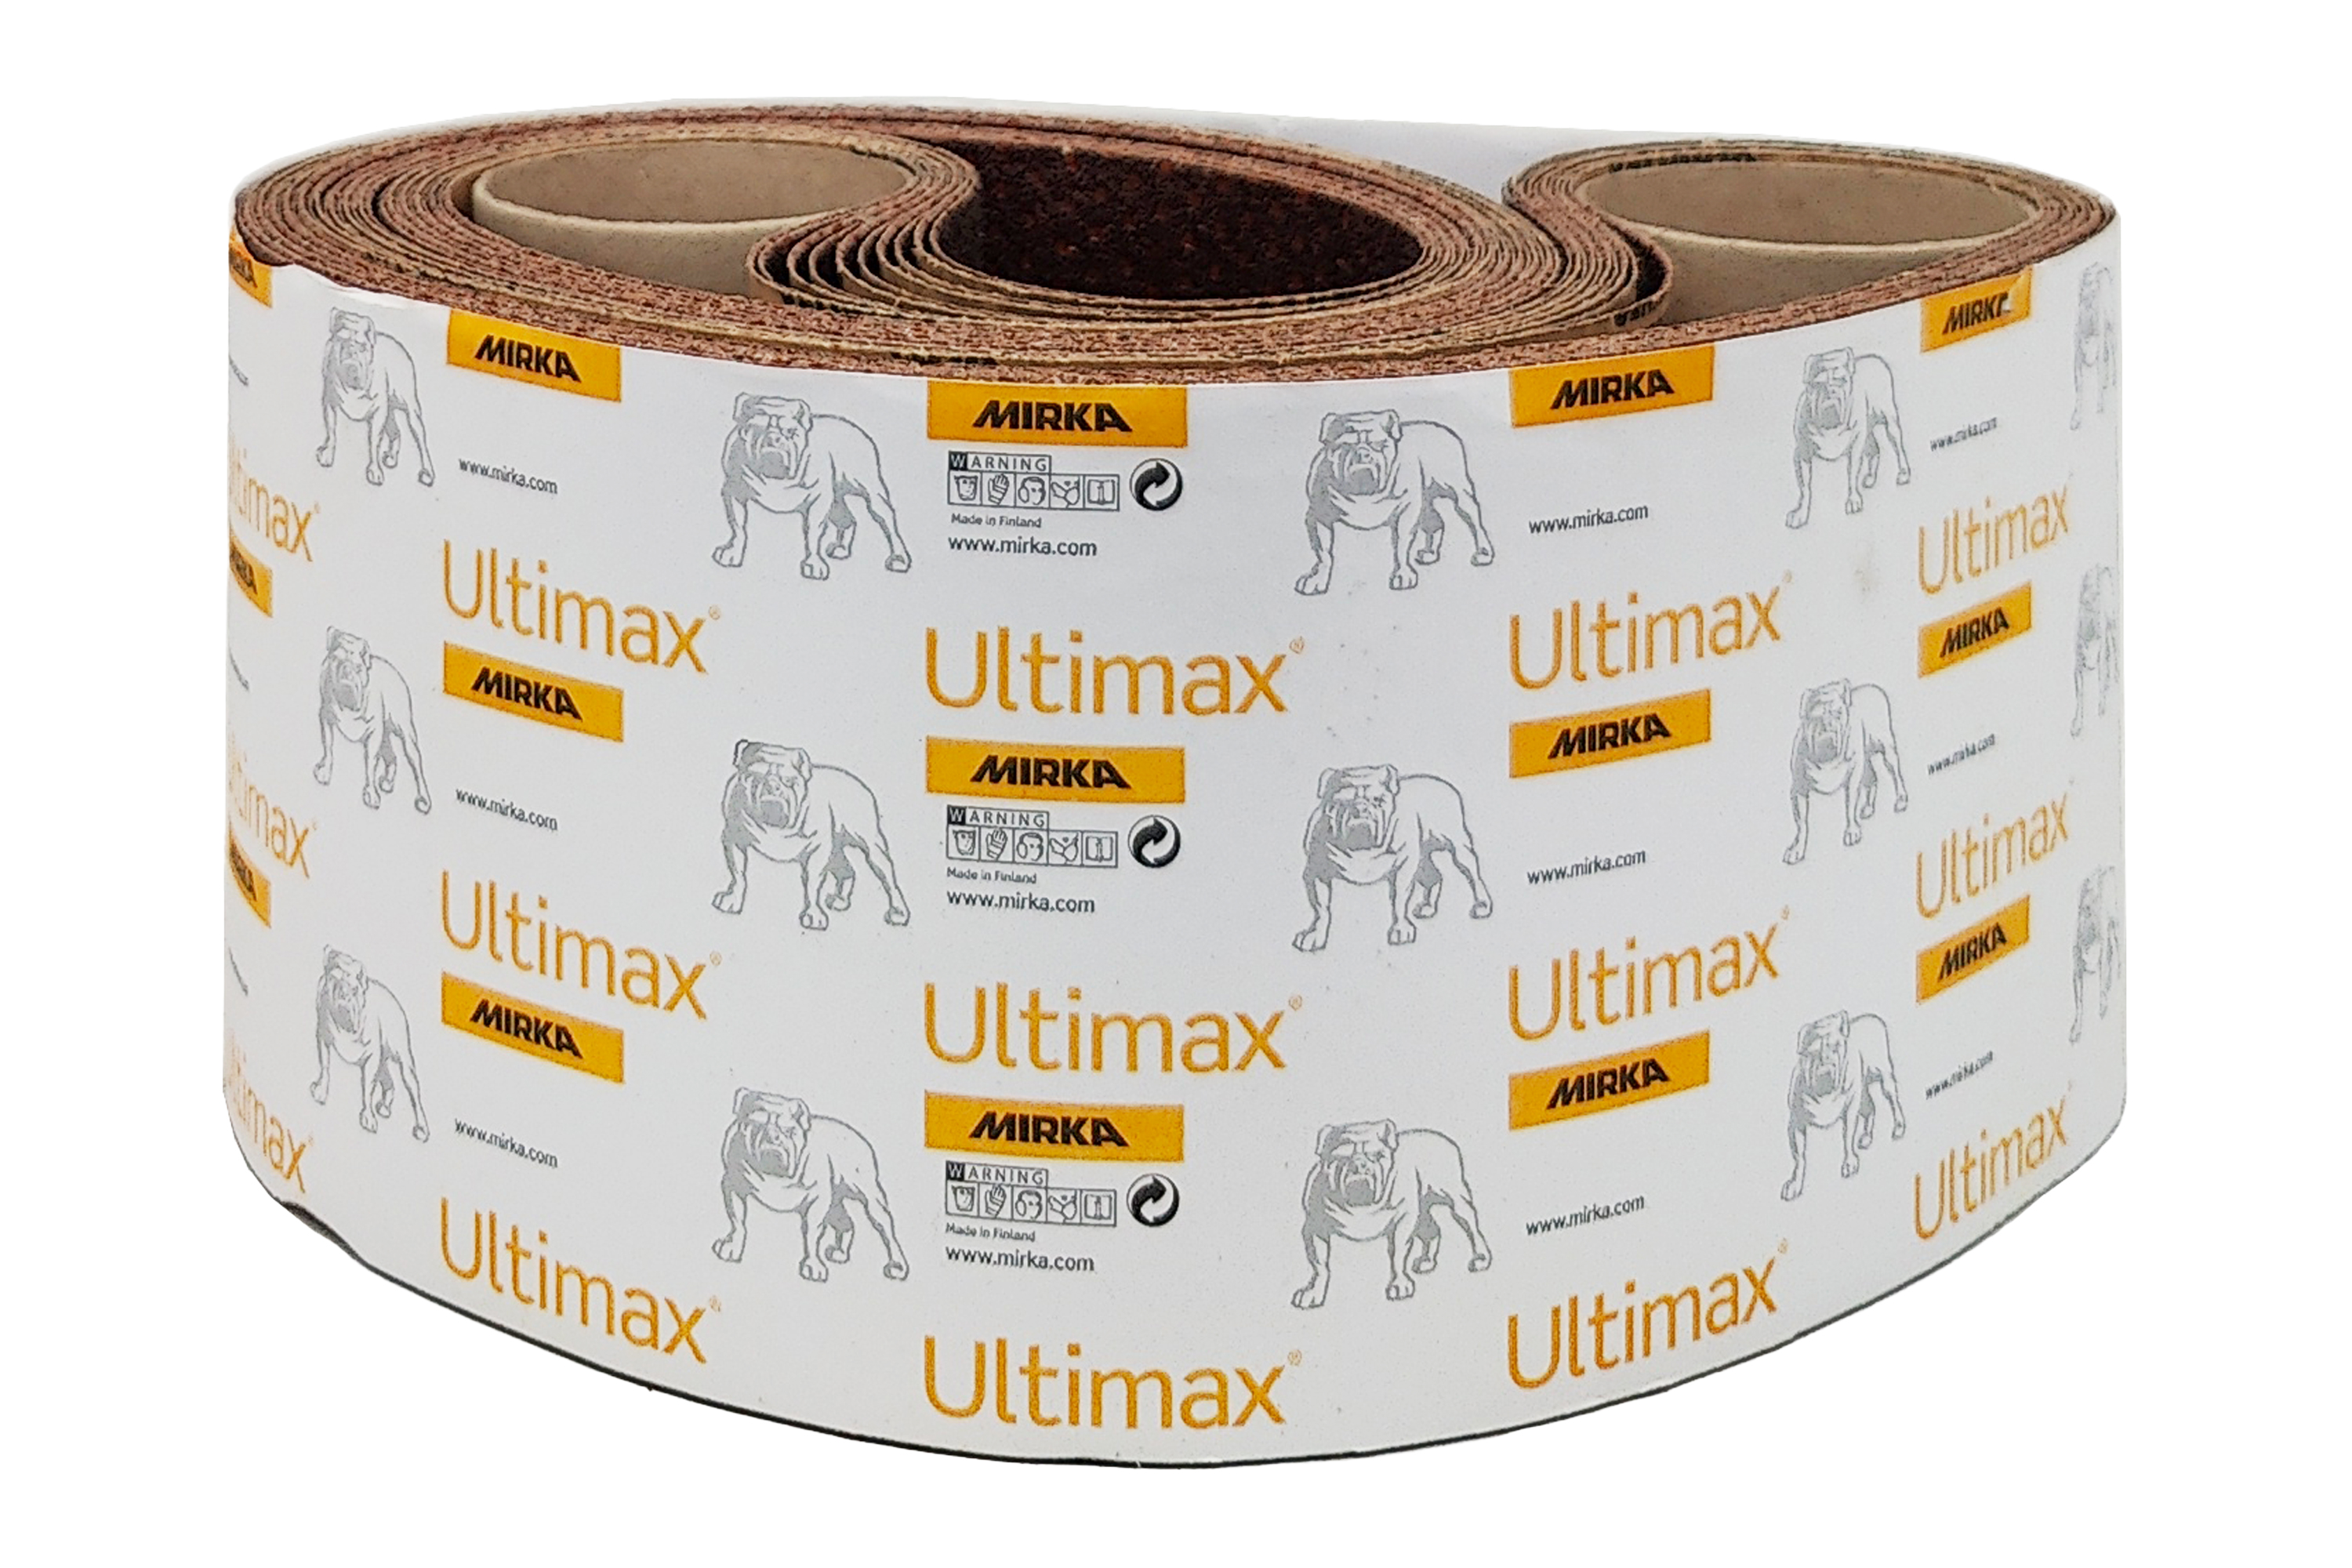 Abbildung Mirka Ultimax 150x2600mm mit Verpackung.